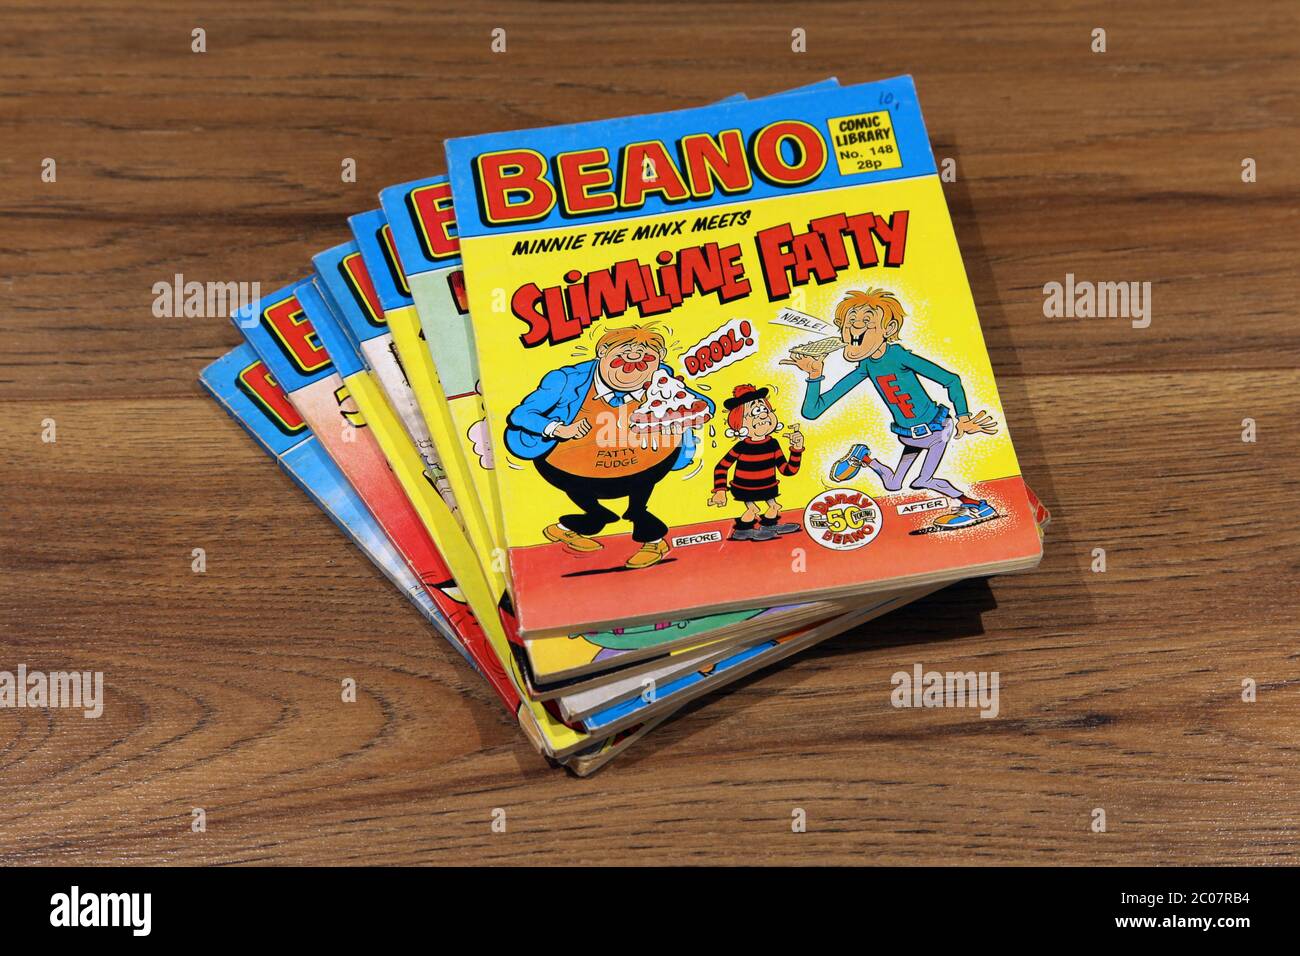 Beano Comic Library No.148 1988 'Minnie the Minx meets Slimline Fatty' in einem Stapel von Beano-Comics gestapelt Stockfoto